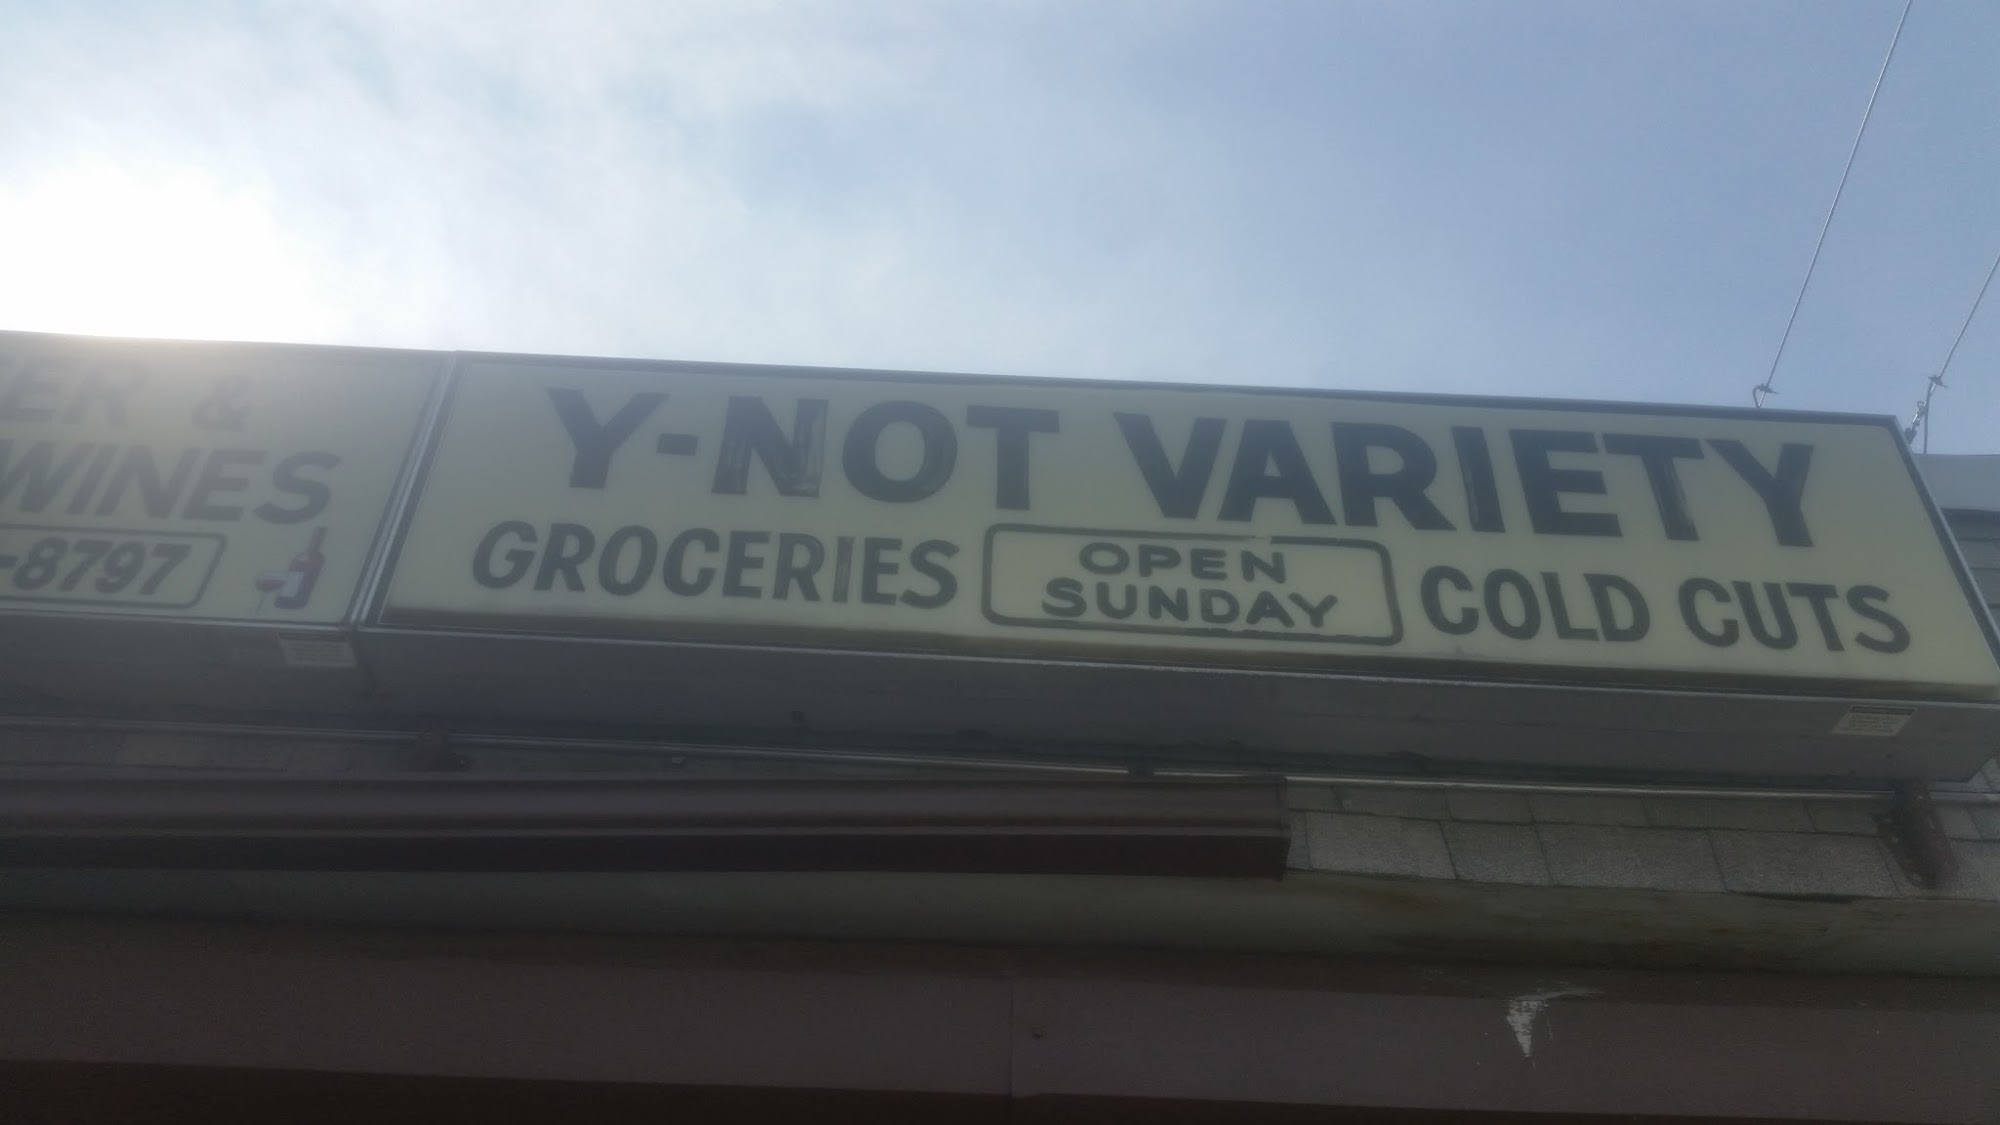 Y-Not Variety